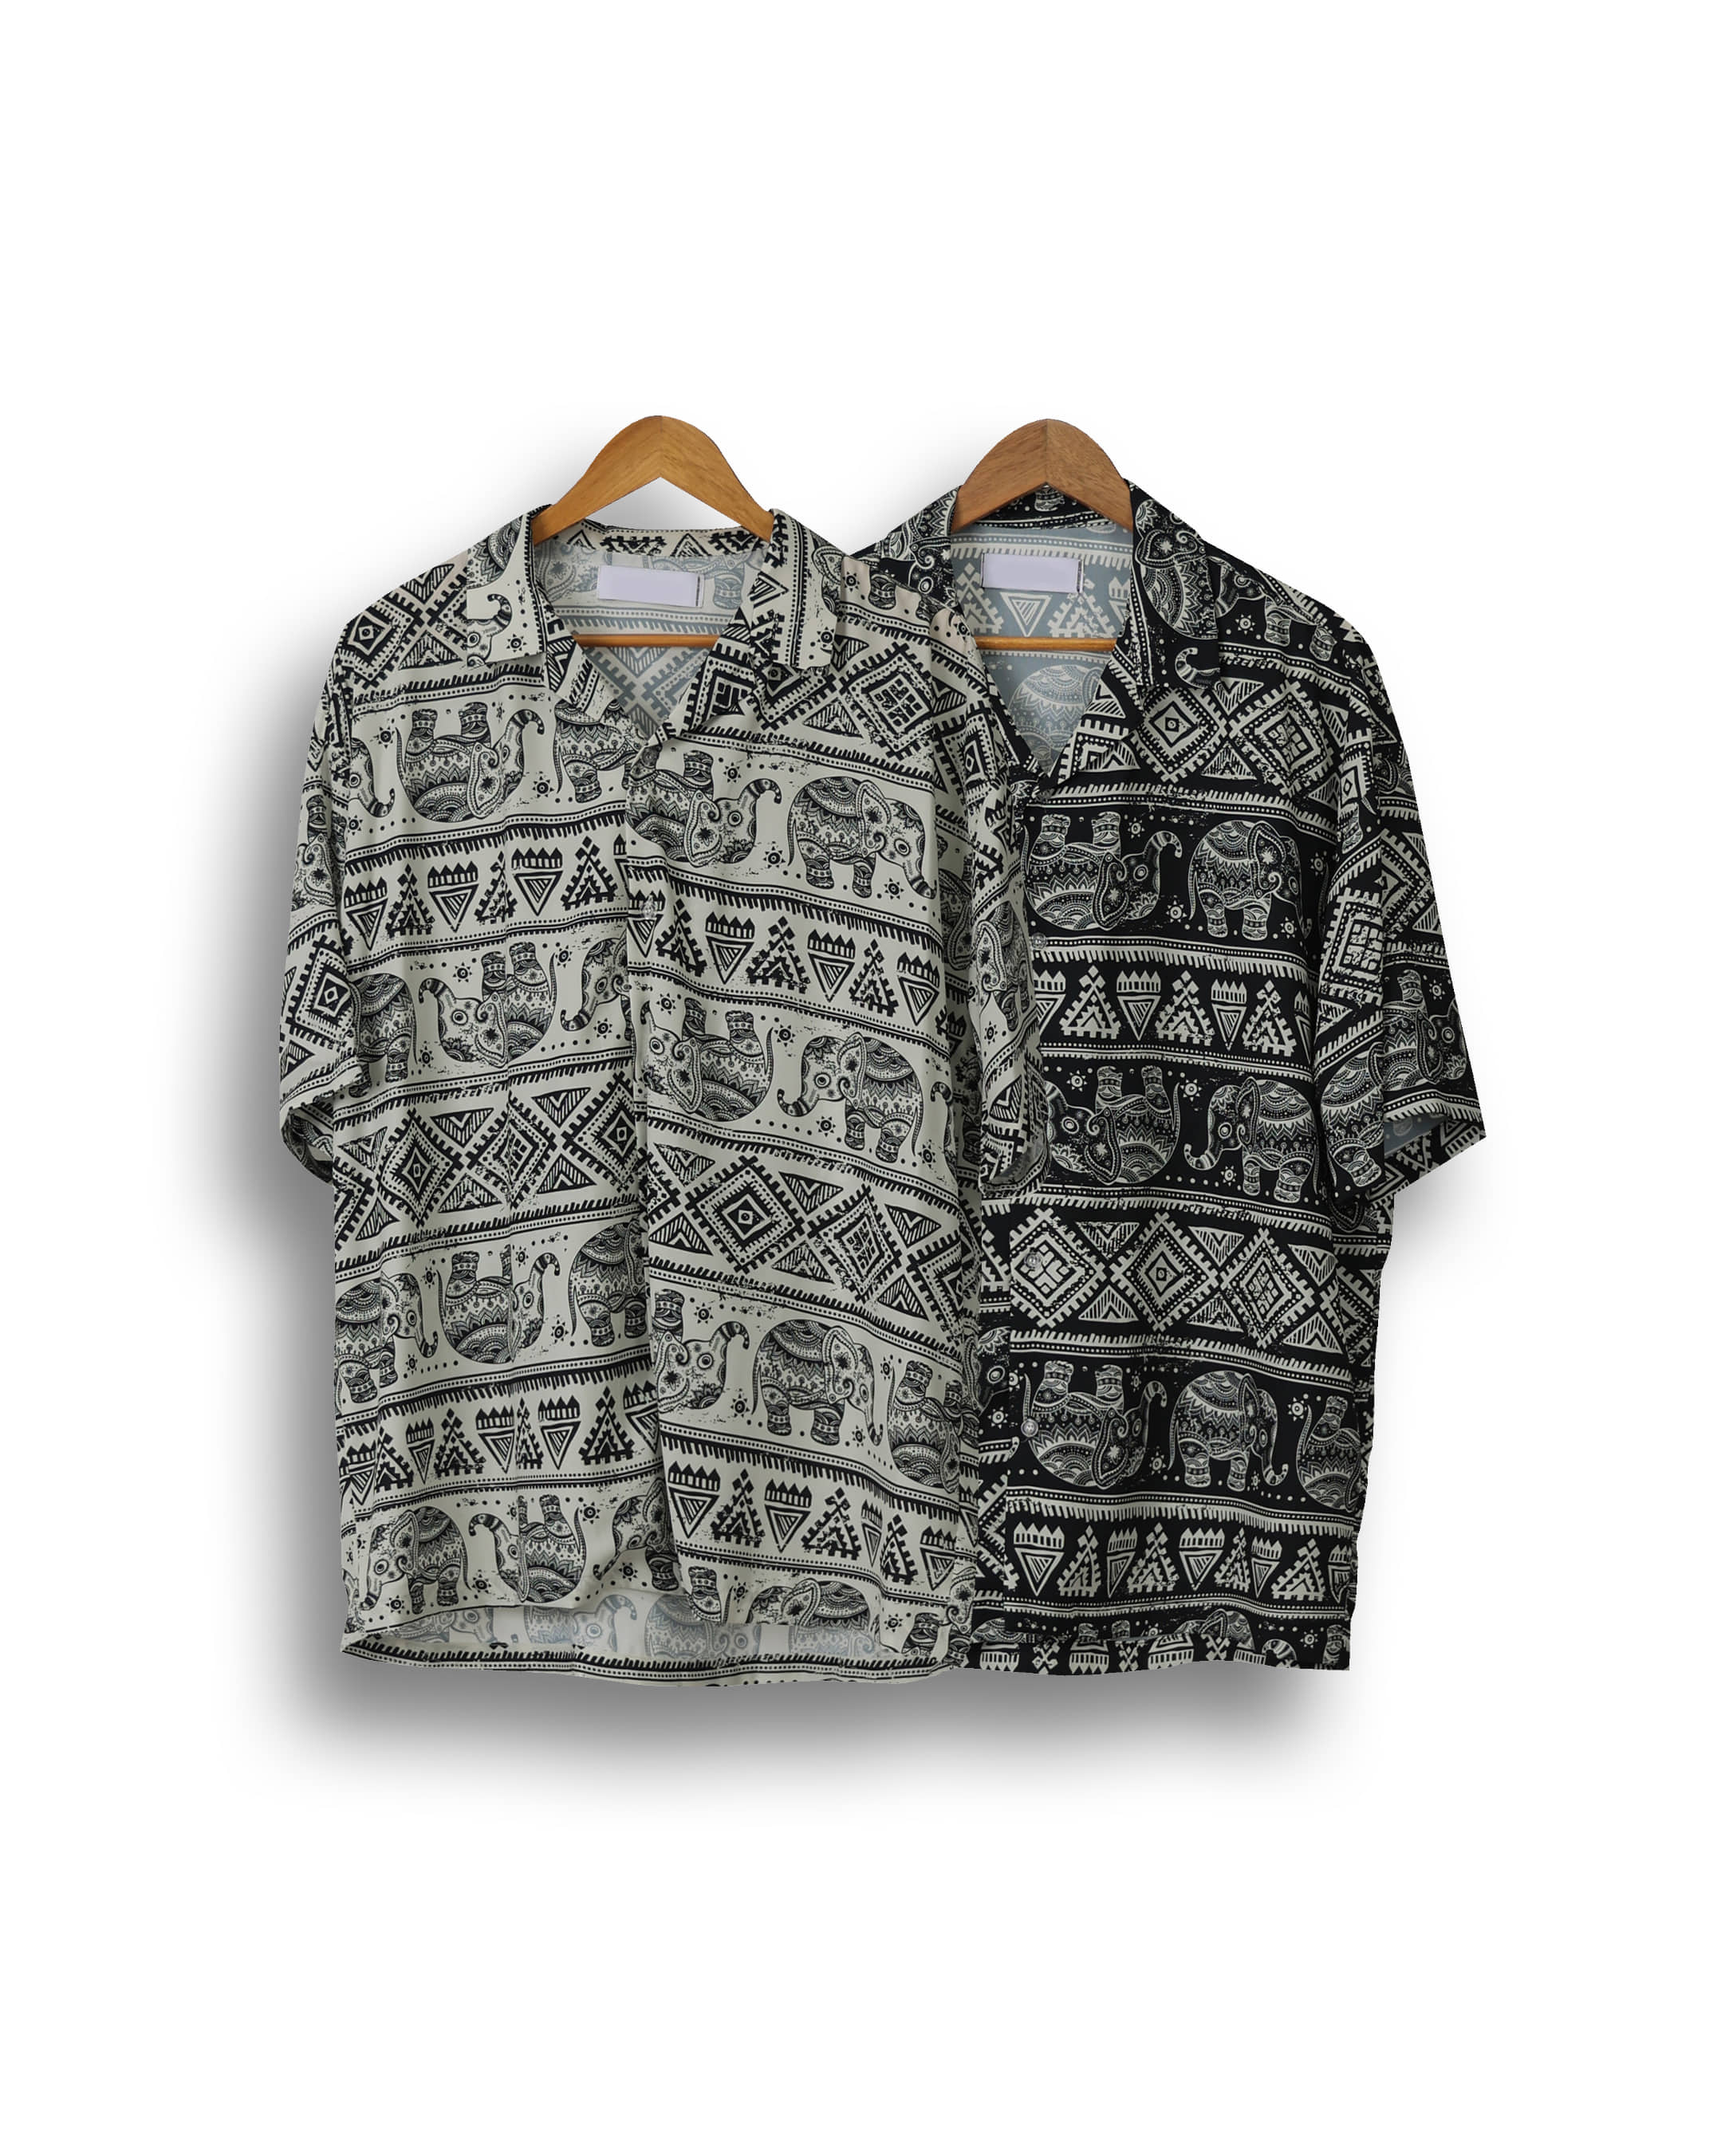 CLAP Indian Ethnic Pattern Shirts (Black/Ivory)